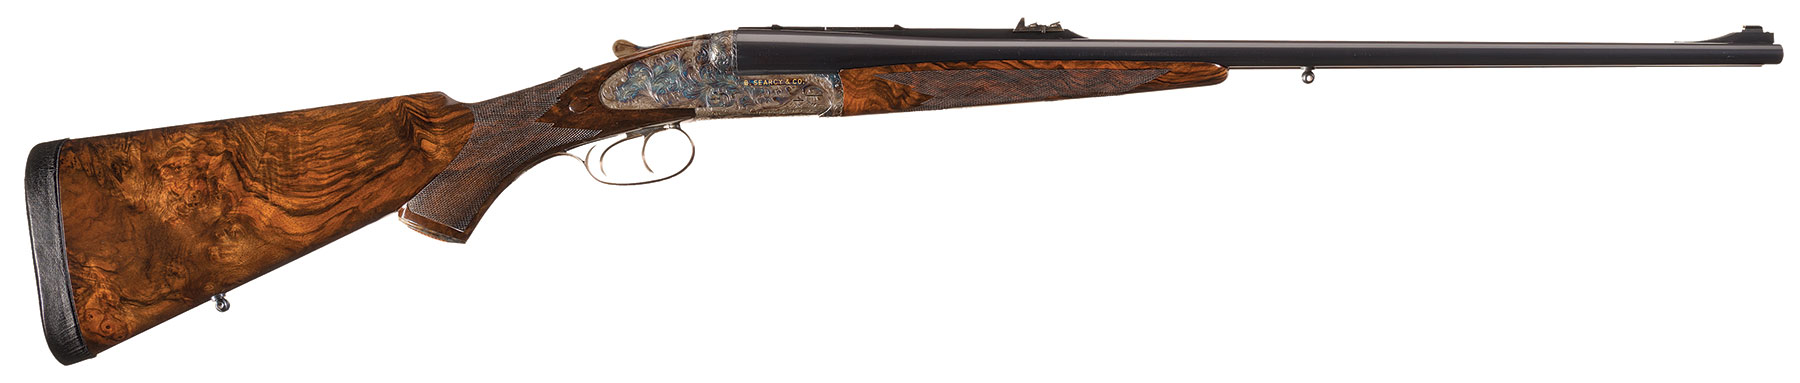 B. Searcy Sidelock Double Rifle